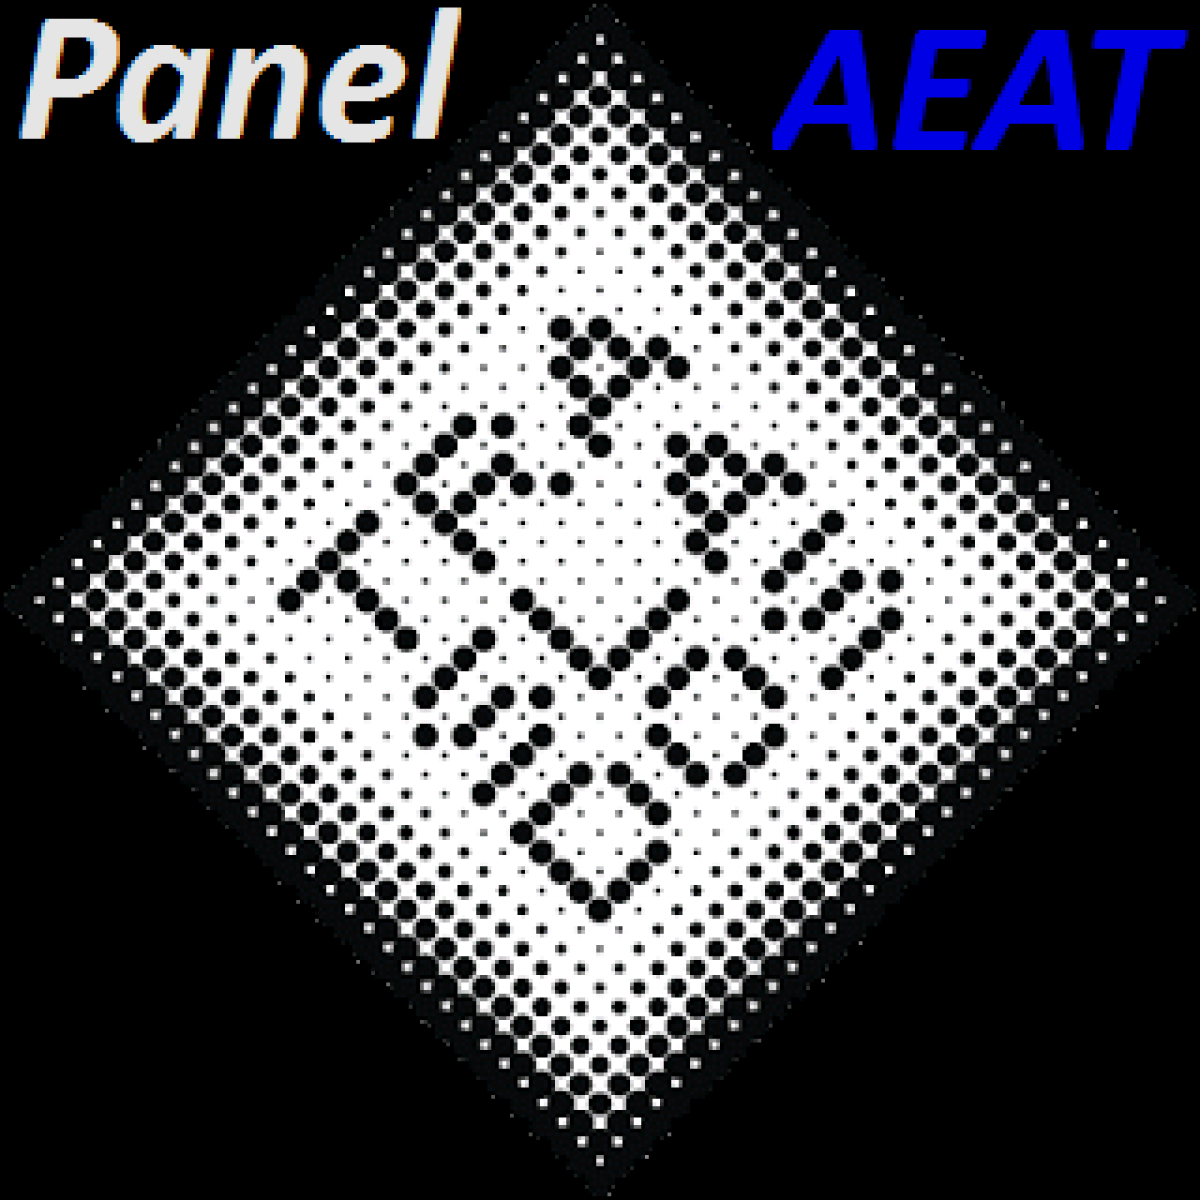 Panel-AEAT.